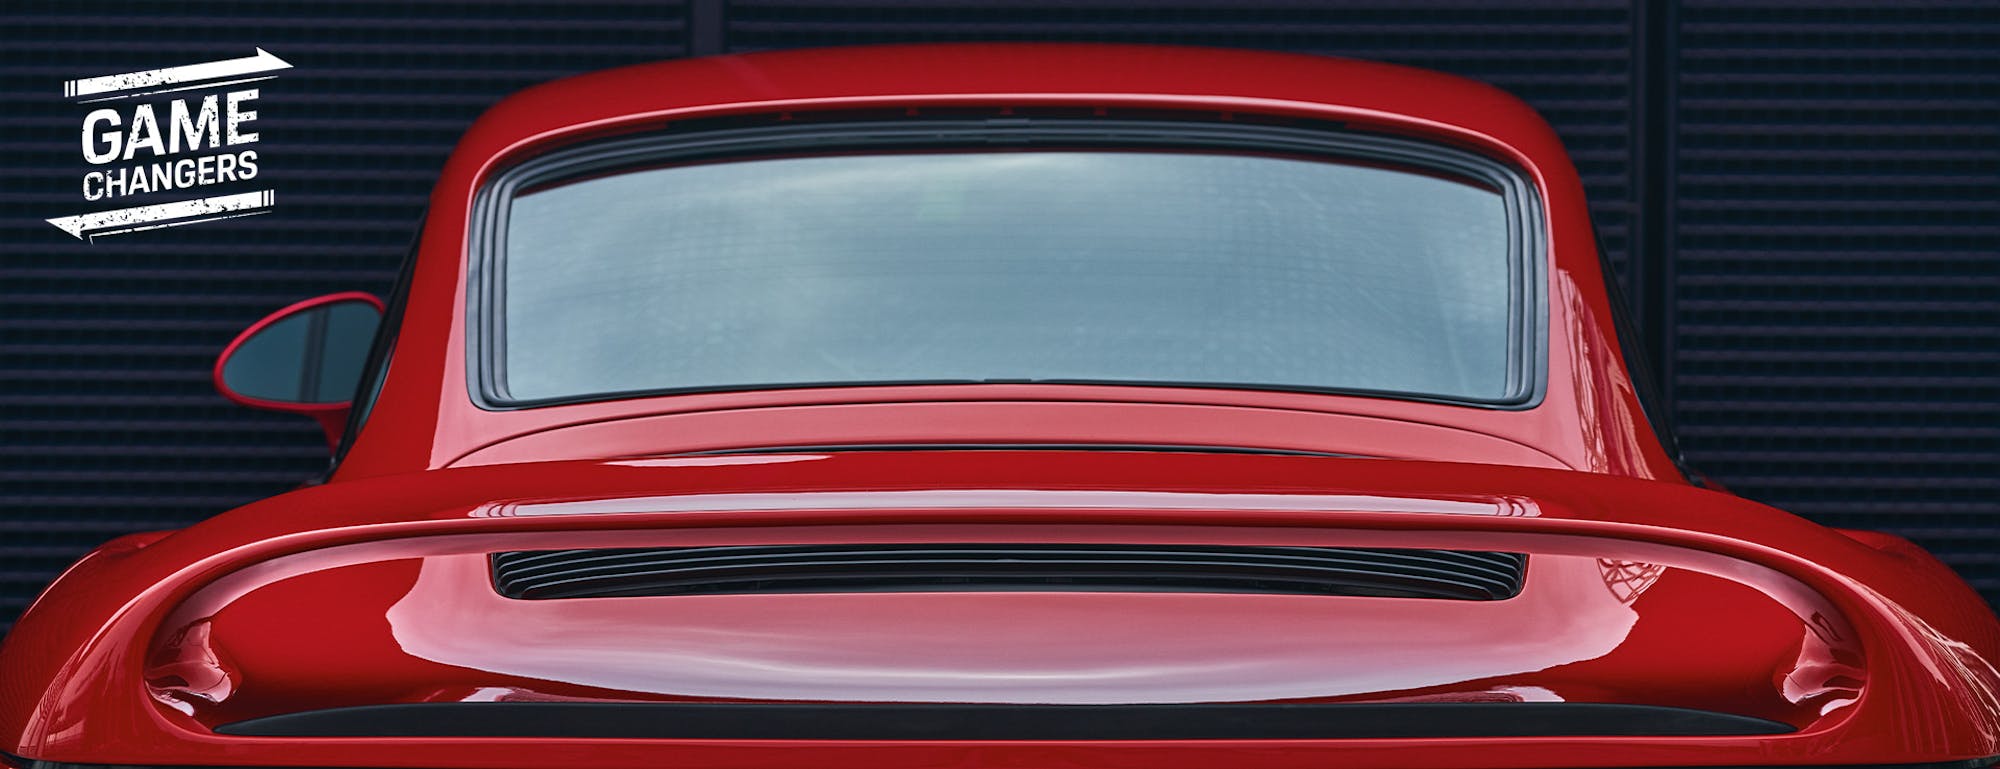 Rear of red Porsche 959 sportscar showing spoiler  